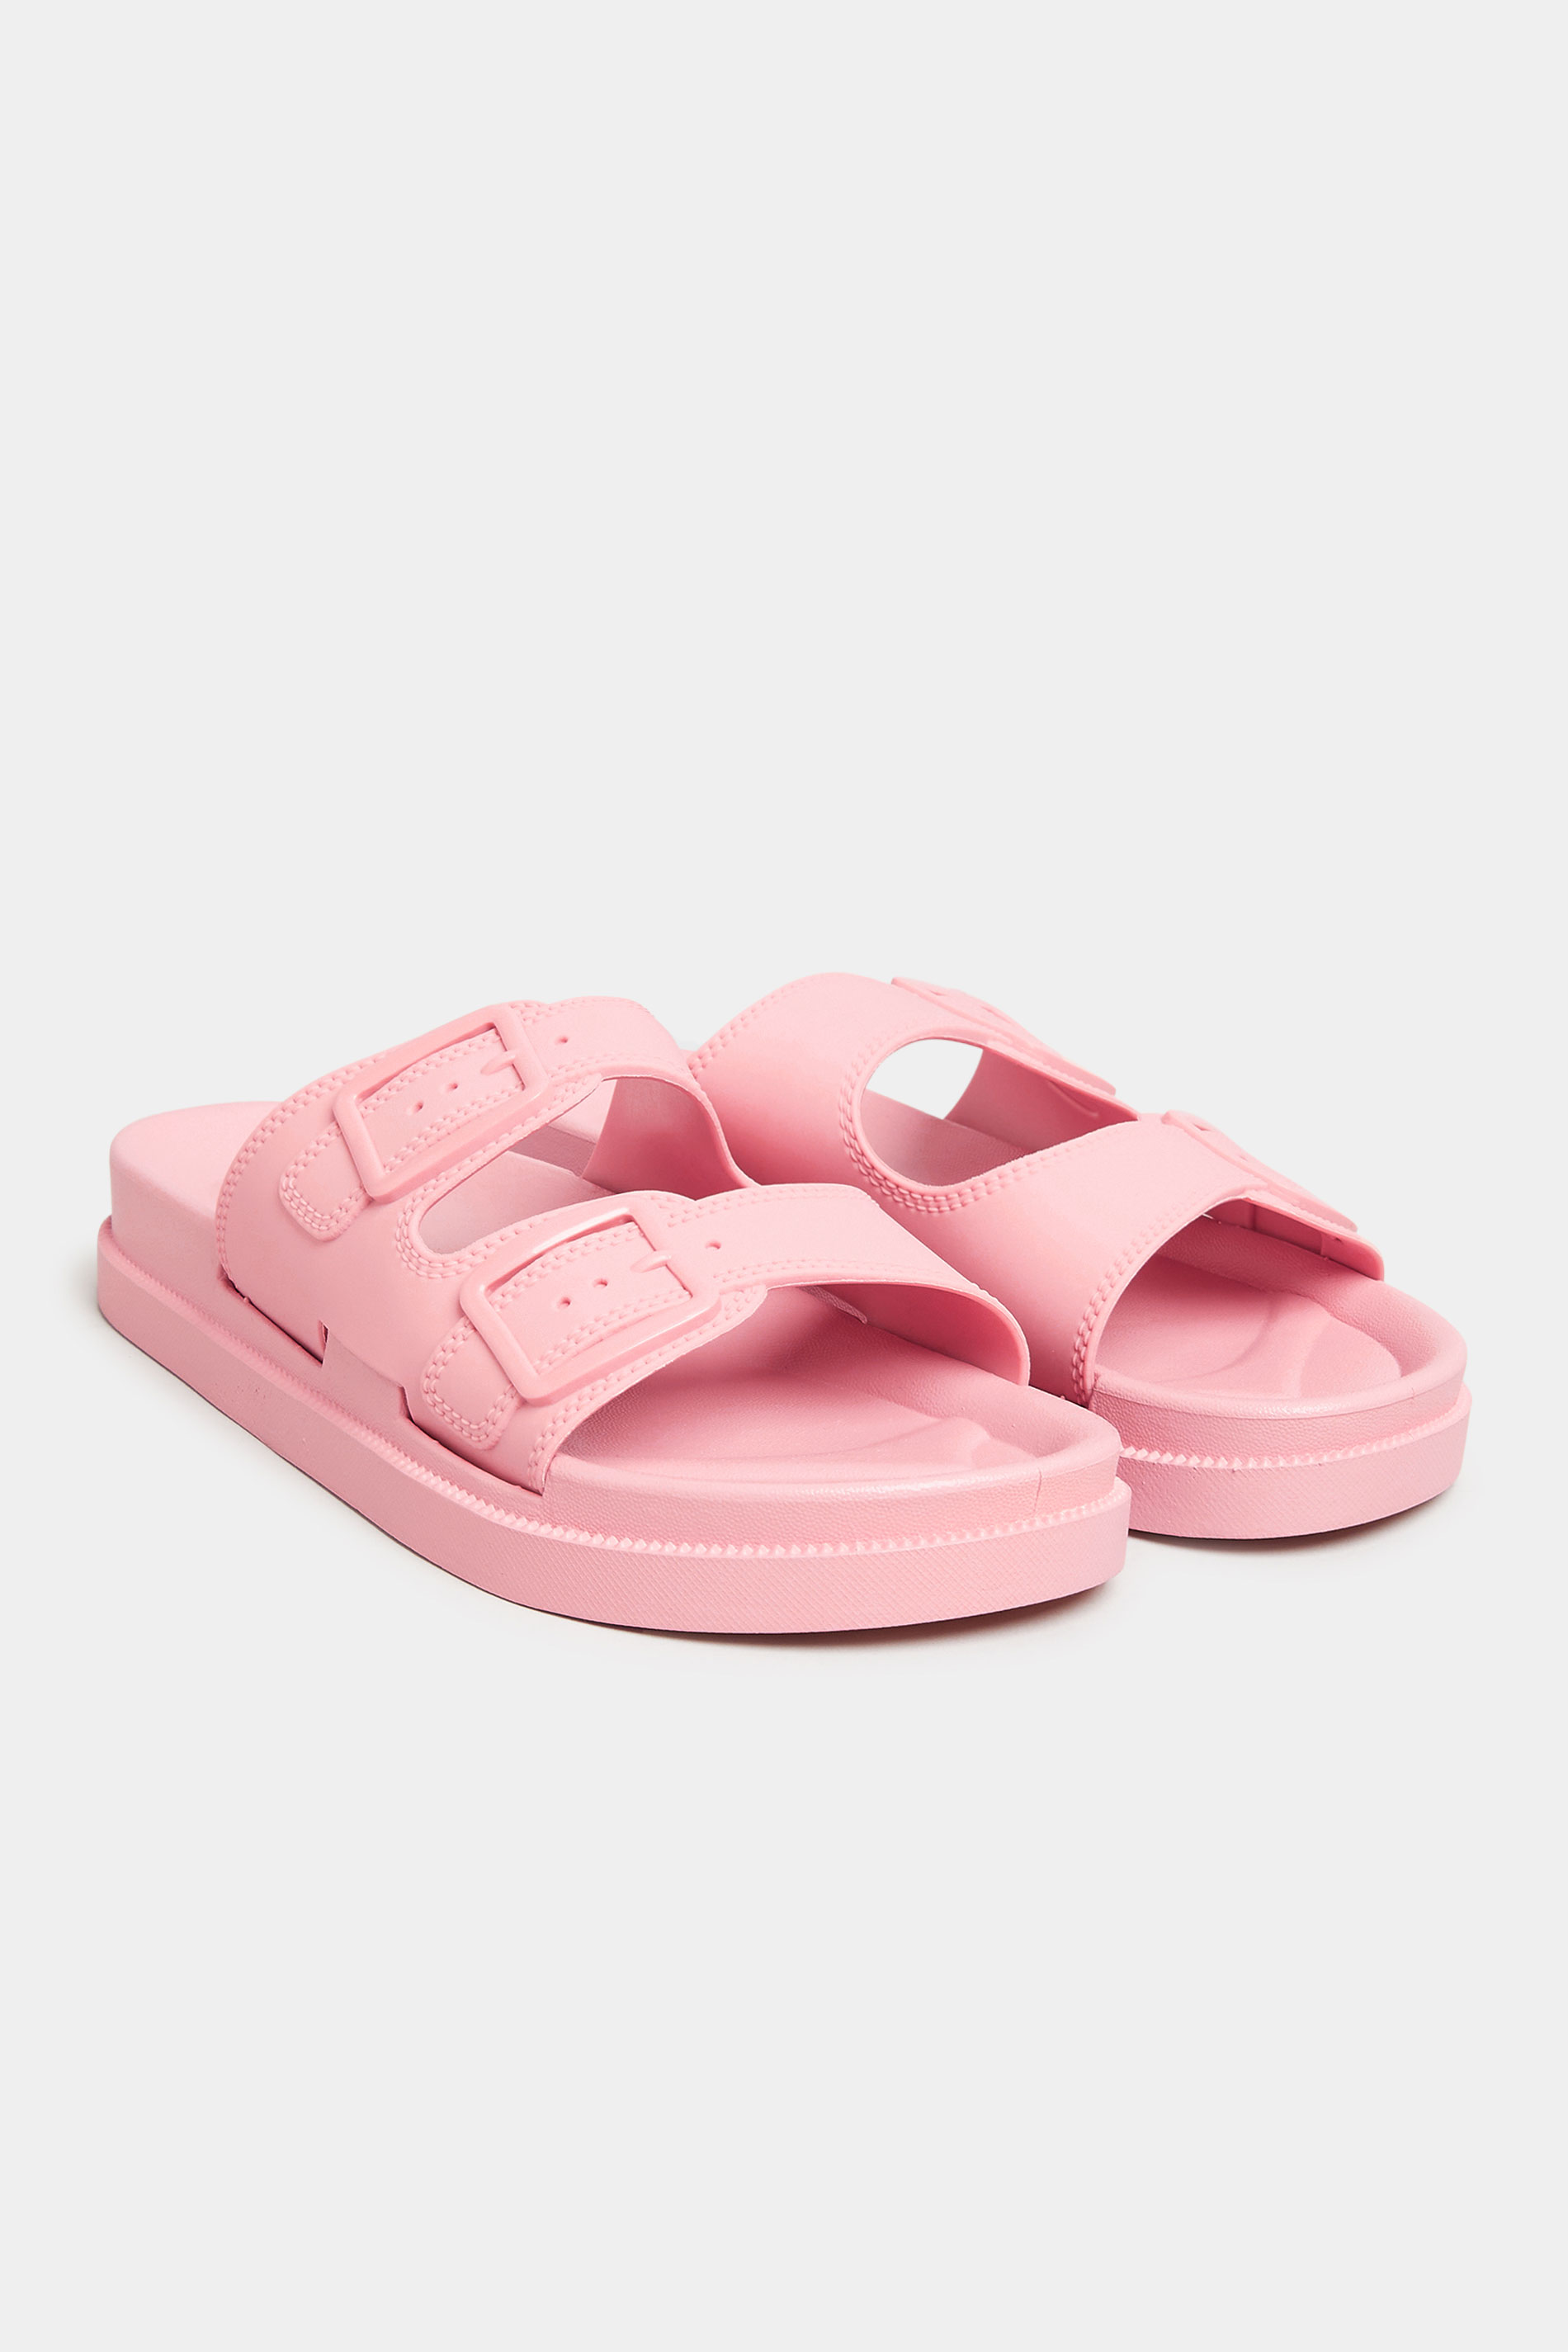 Grande taille  Shoes Grande taille  Sandals | PixieGirl Pink Double Buckle Slider Sandals In Standard D Fit - KS31447